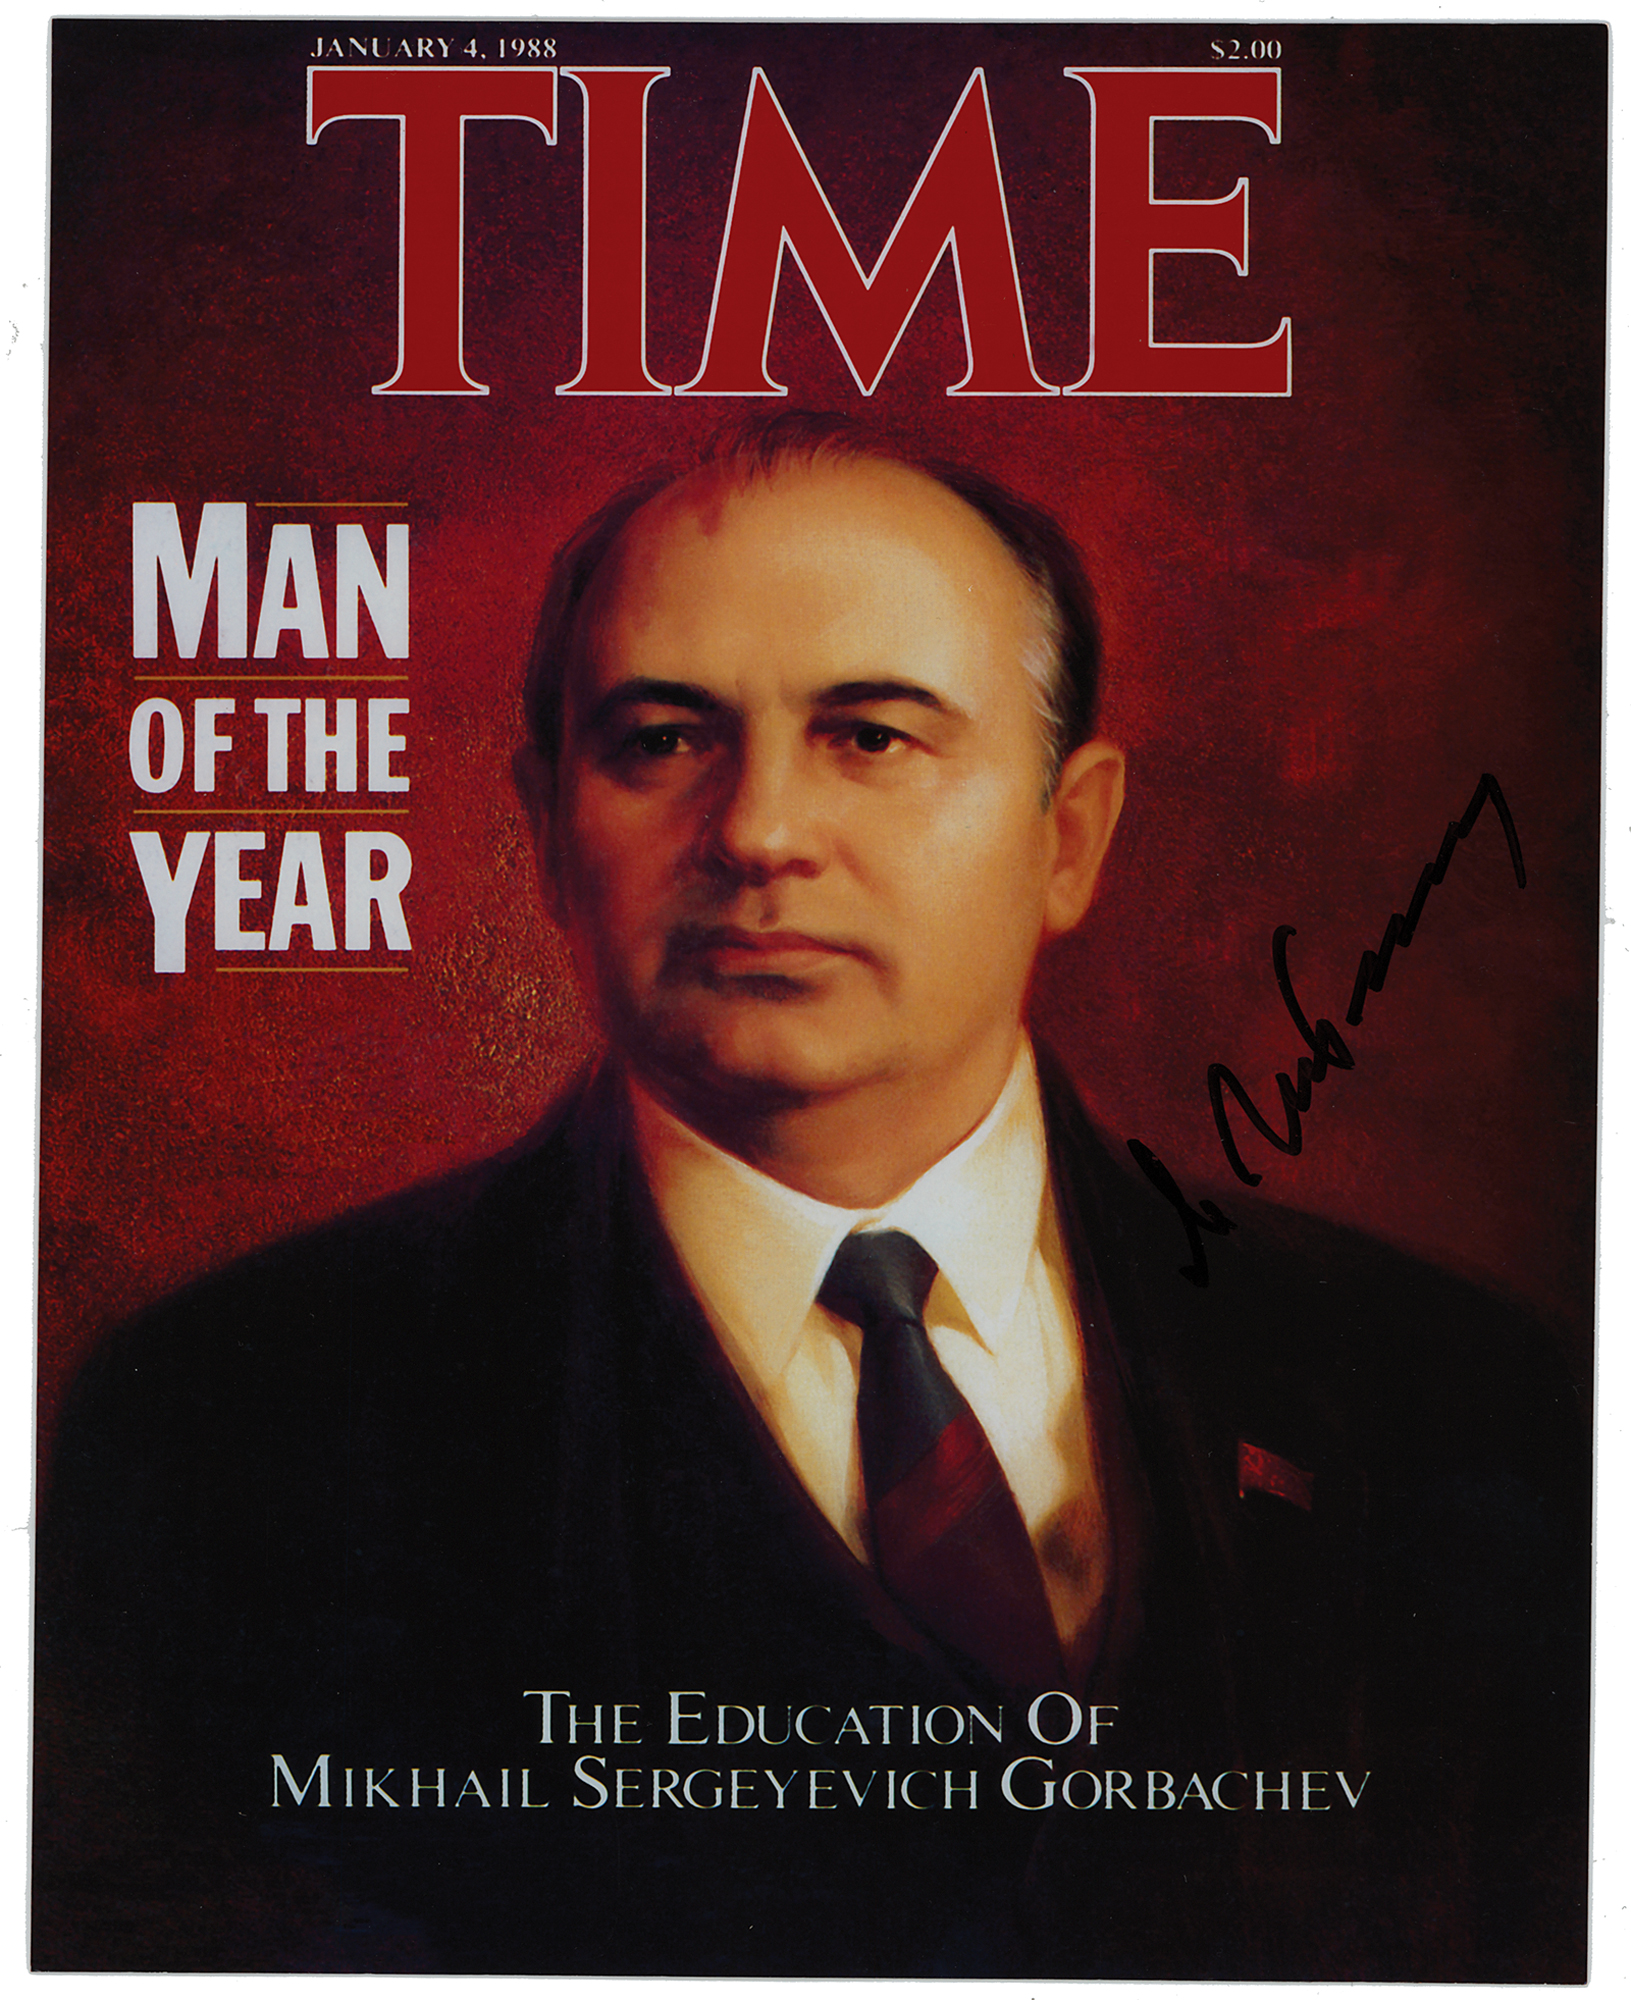 Lot #209 Mikhail Gorbachev Signed Photograph